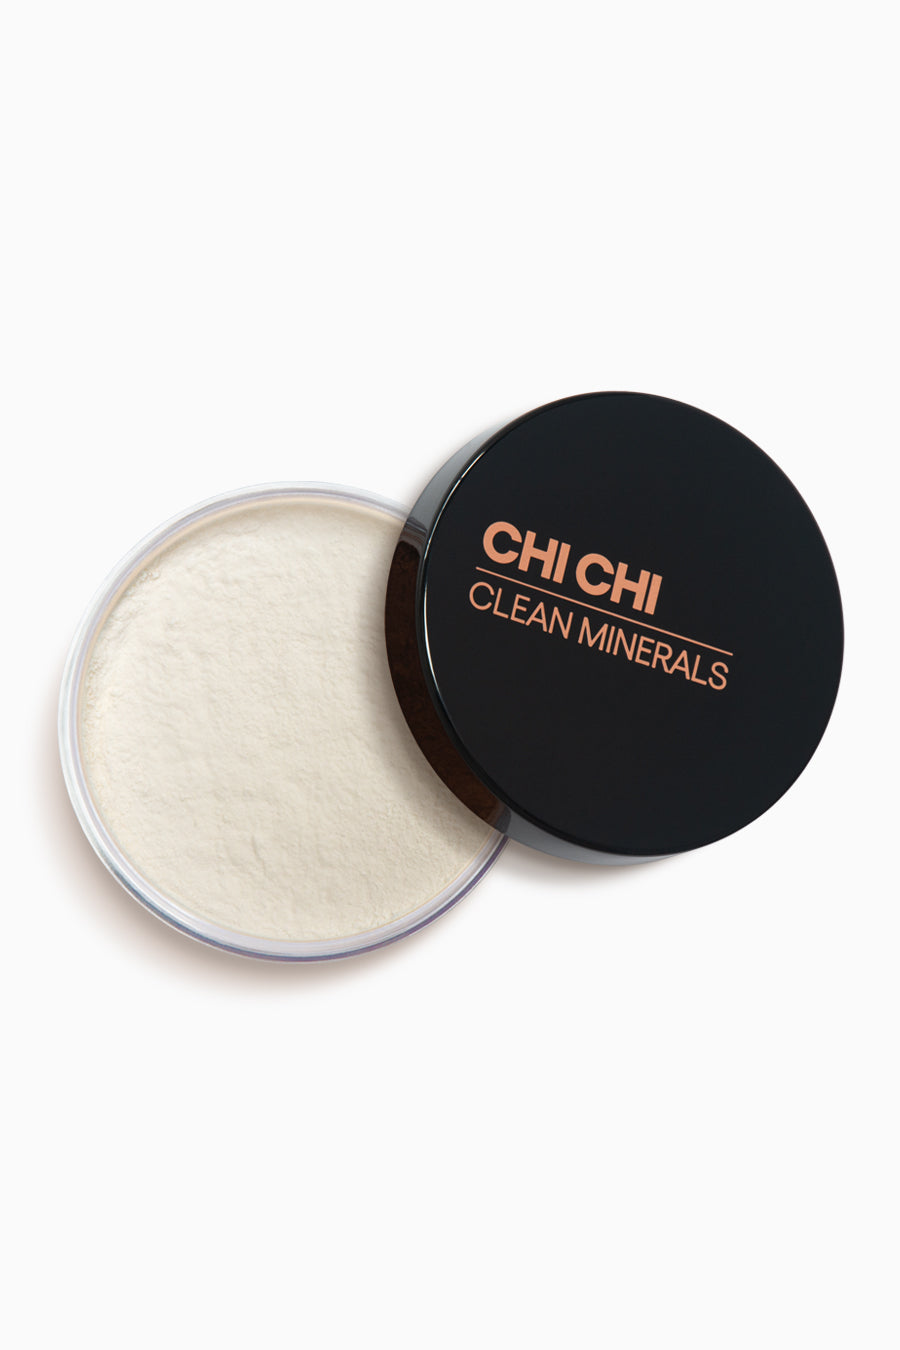 clean-minerals-translucent-finishing-powder